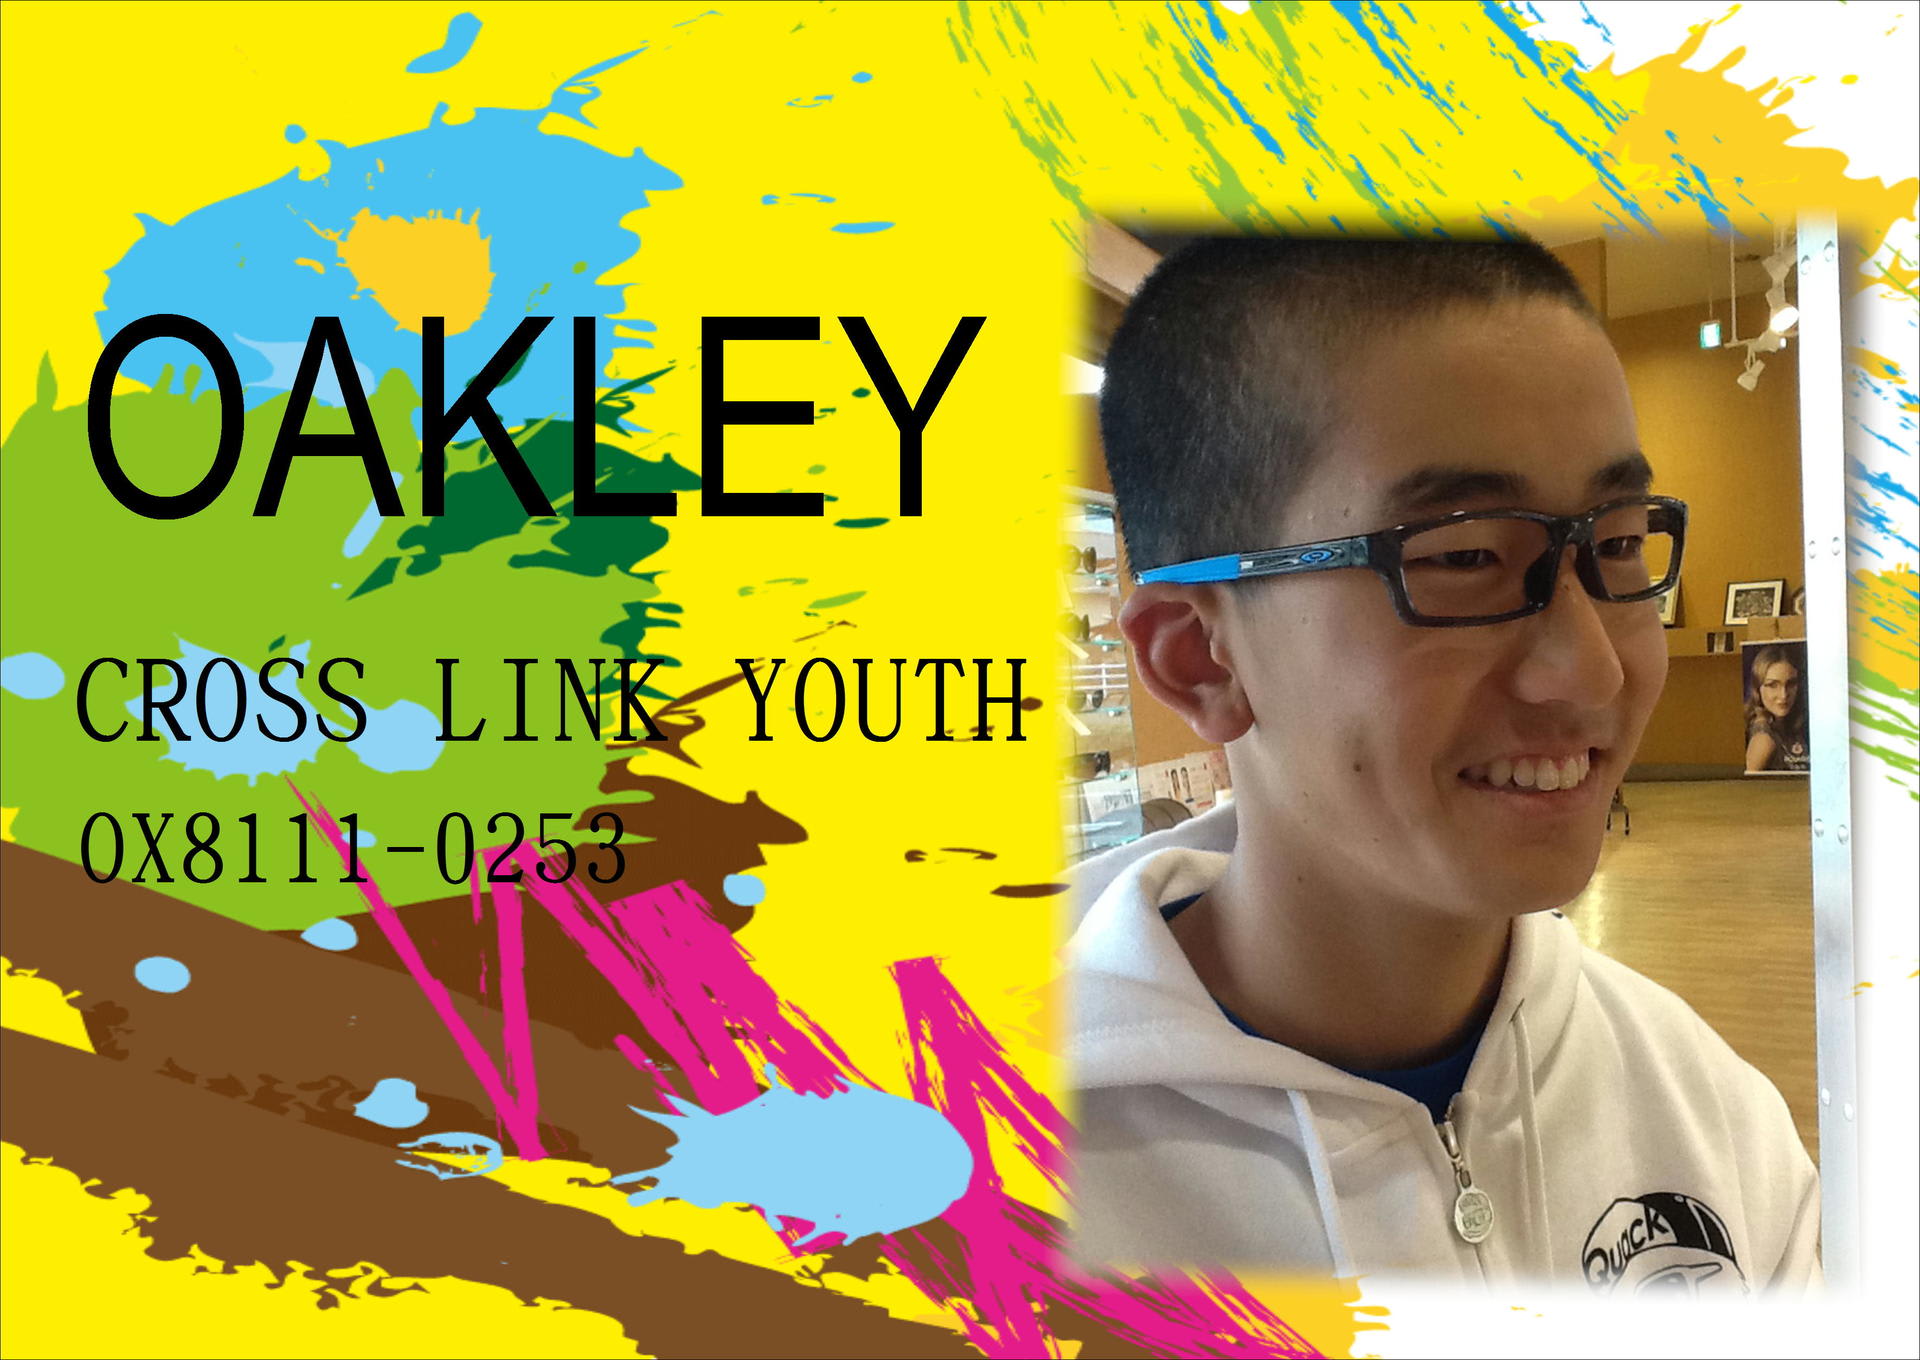 Oakley Crosslink Youth Ox8111 0253 安中市シティメガネ城田 認定眼鏡士在籍 補聴器 時計取扱店